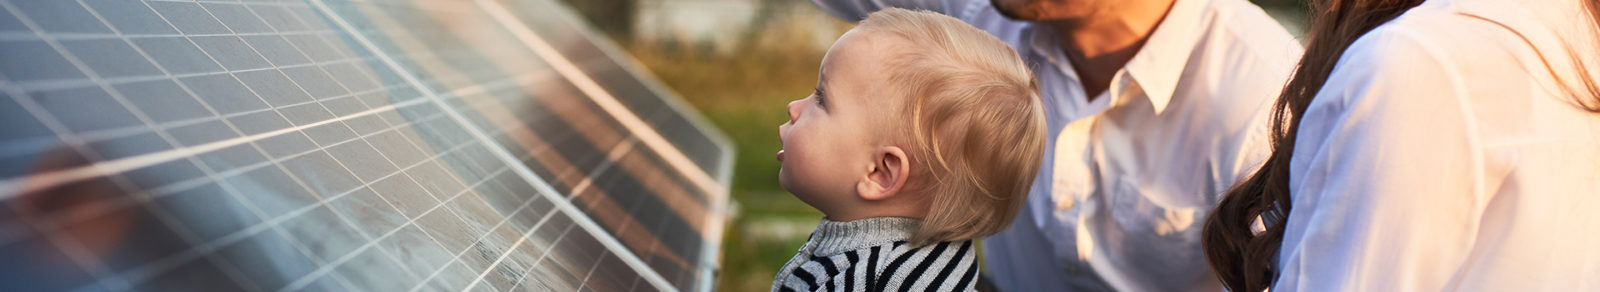 baby looking at solar panels